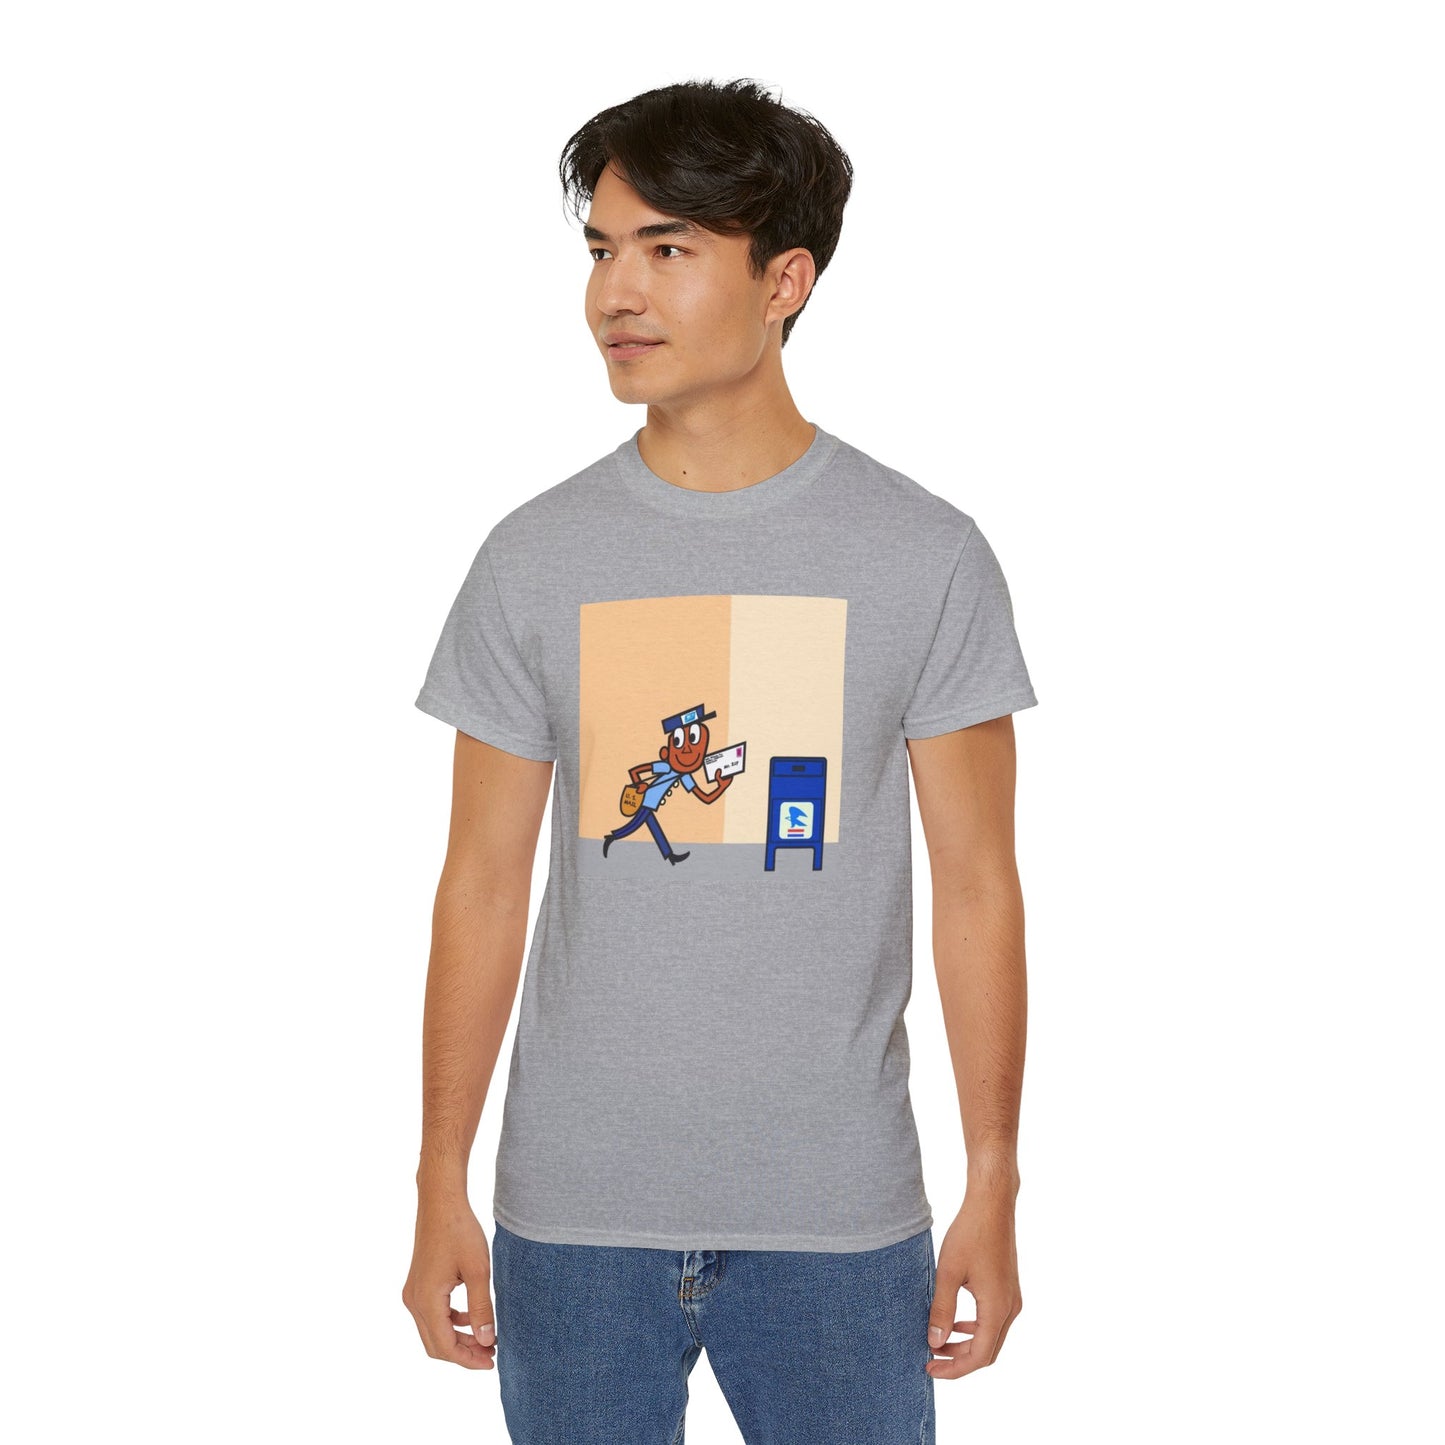 "Picture Shirt" Mr. Zip USPS Logo Man "Unisex T-shirt